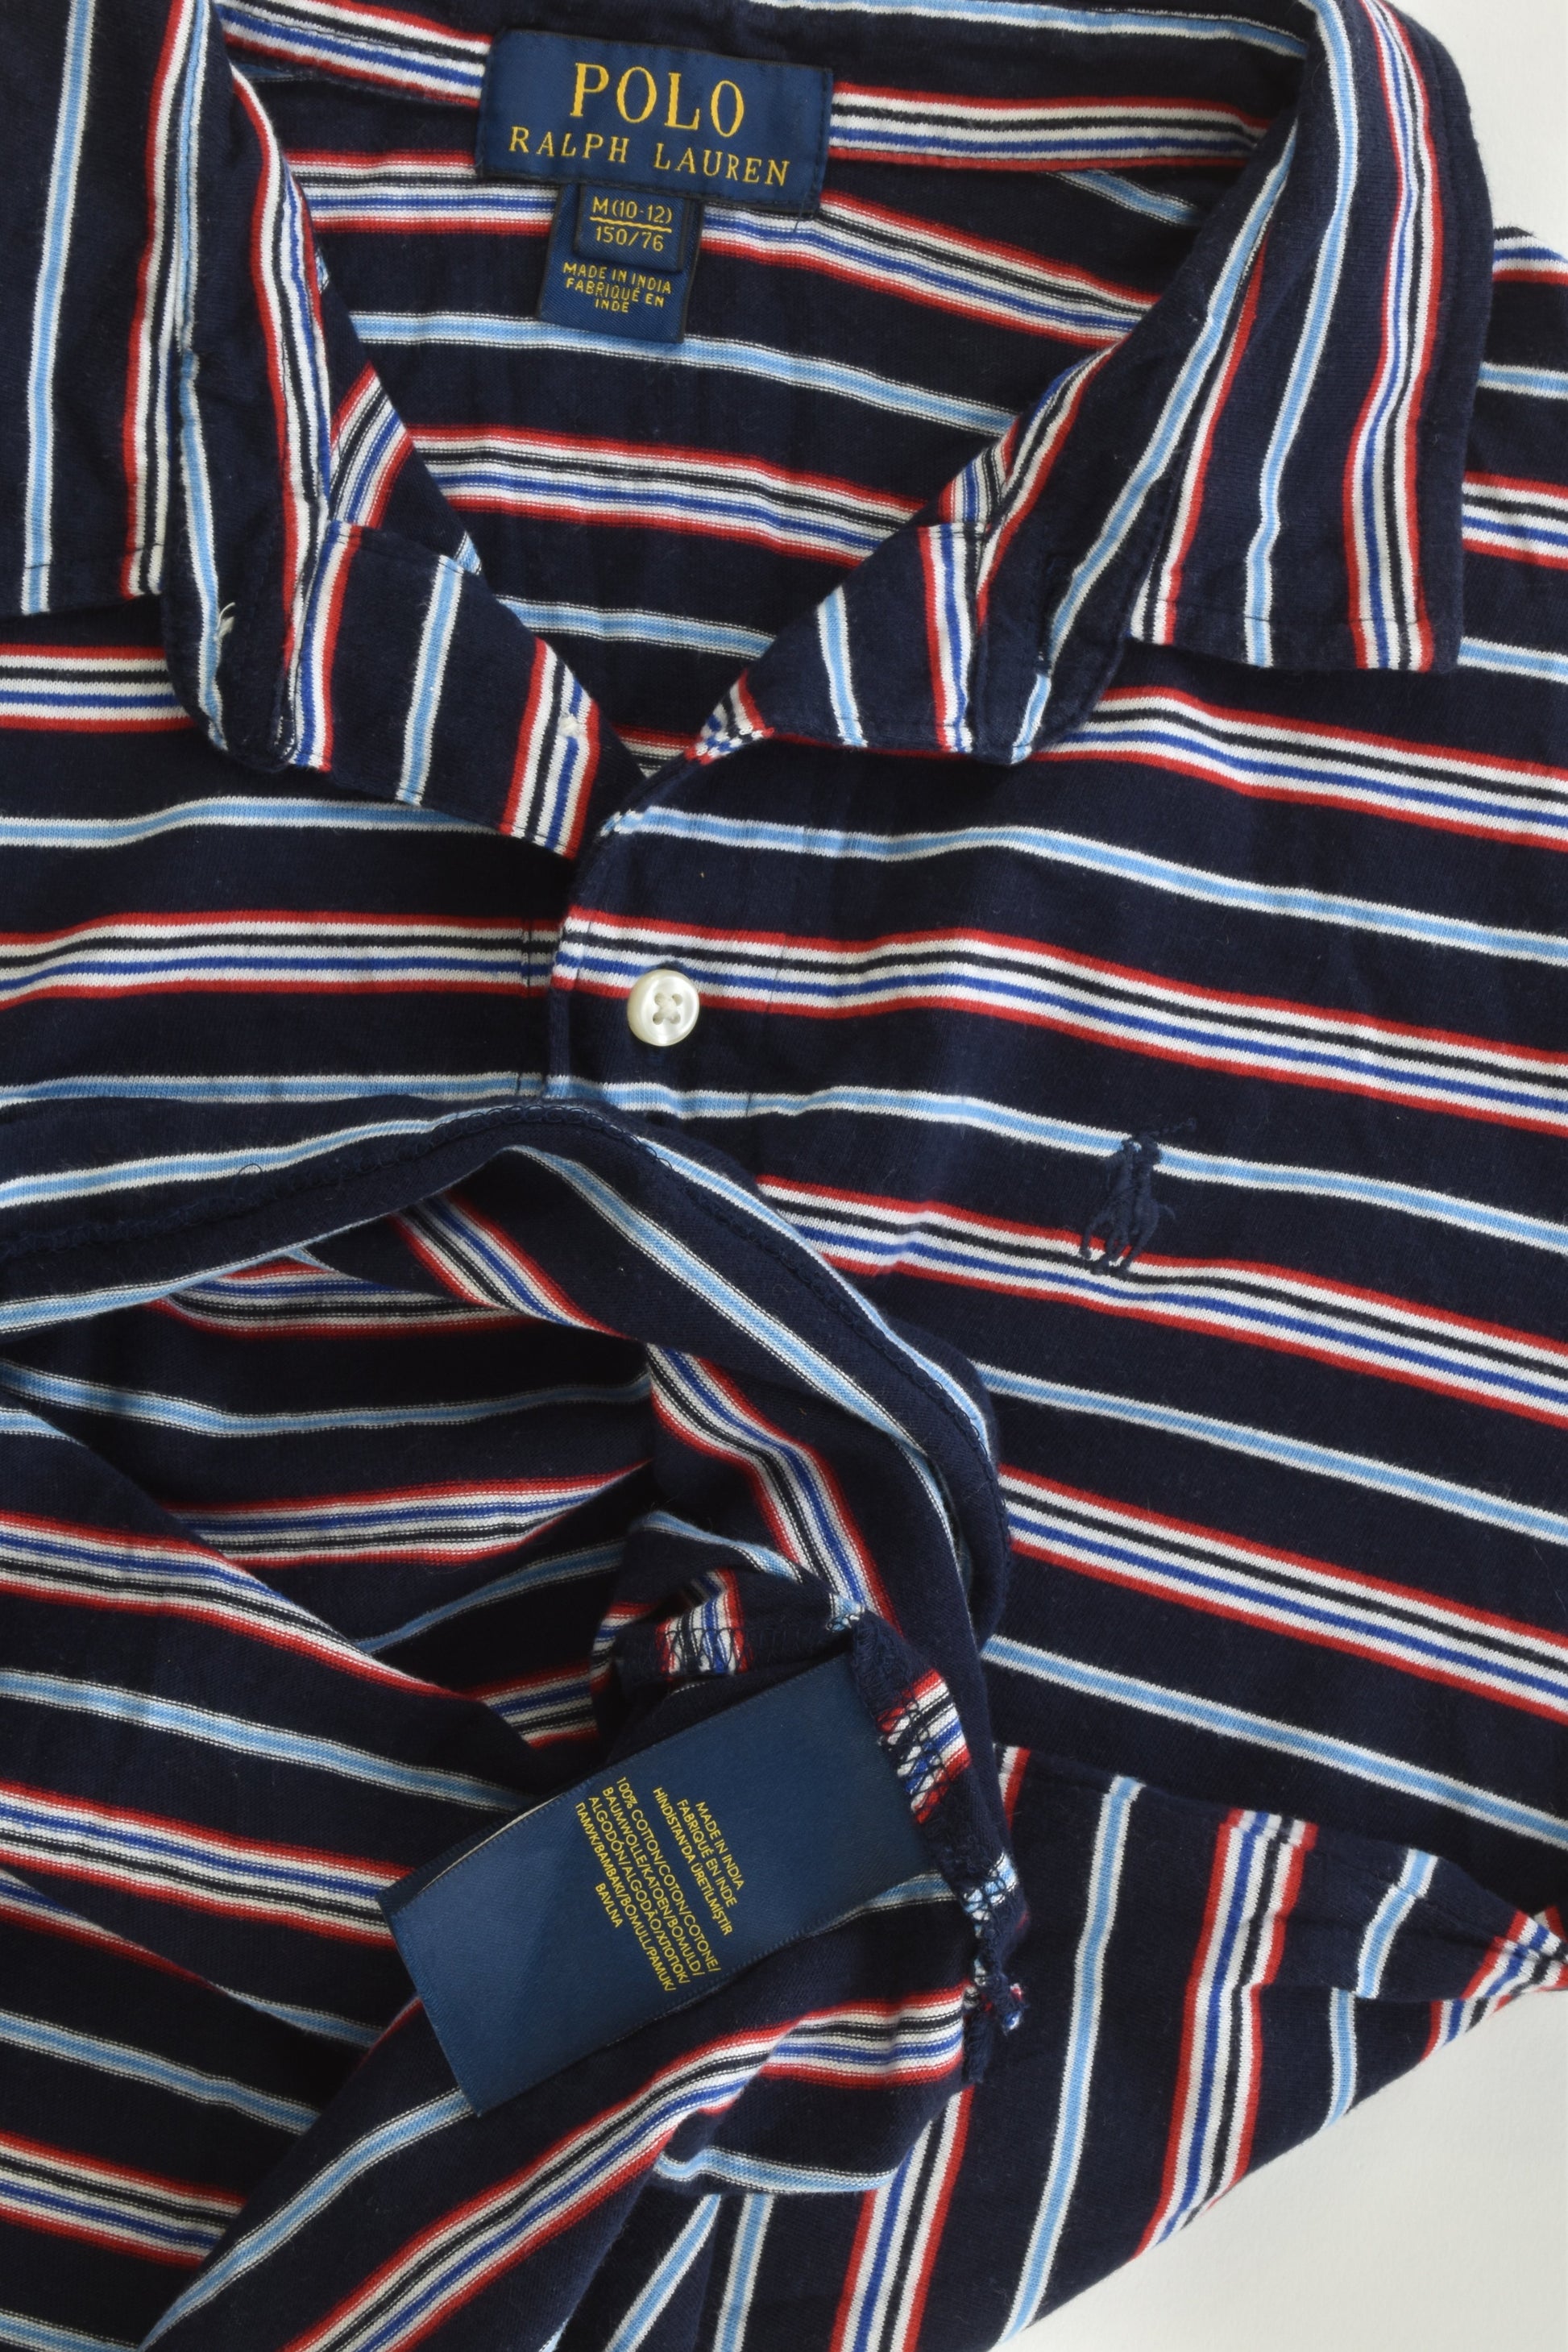 Polo Ralph Lauren Size 10-12 Striped Collared T-shirt